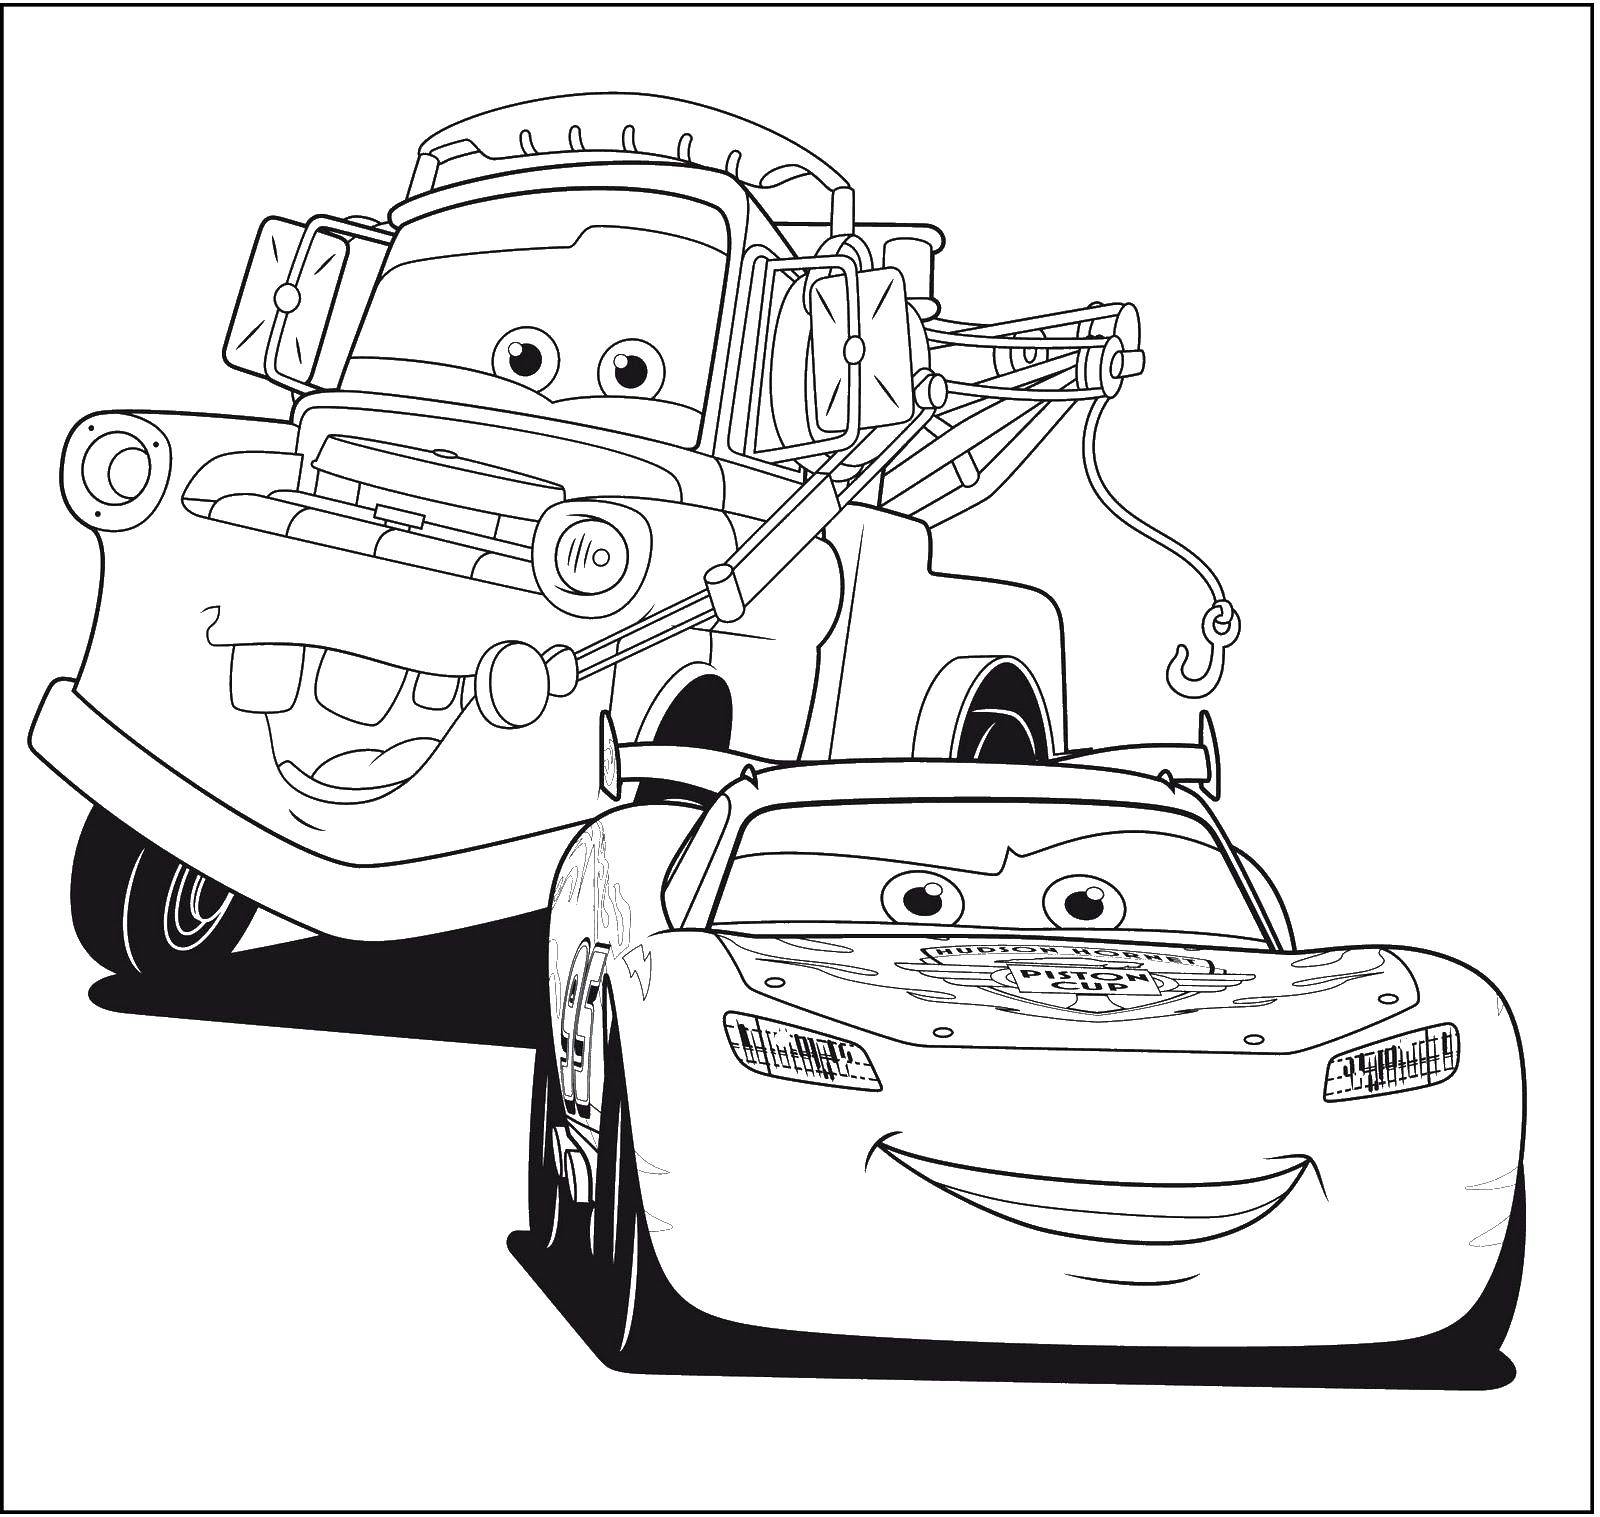 Coloring Cartoon cars . Category Machine . Tags:  cartoon, Cars, cars.